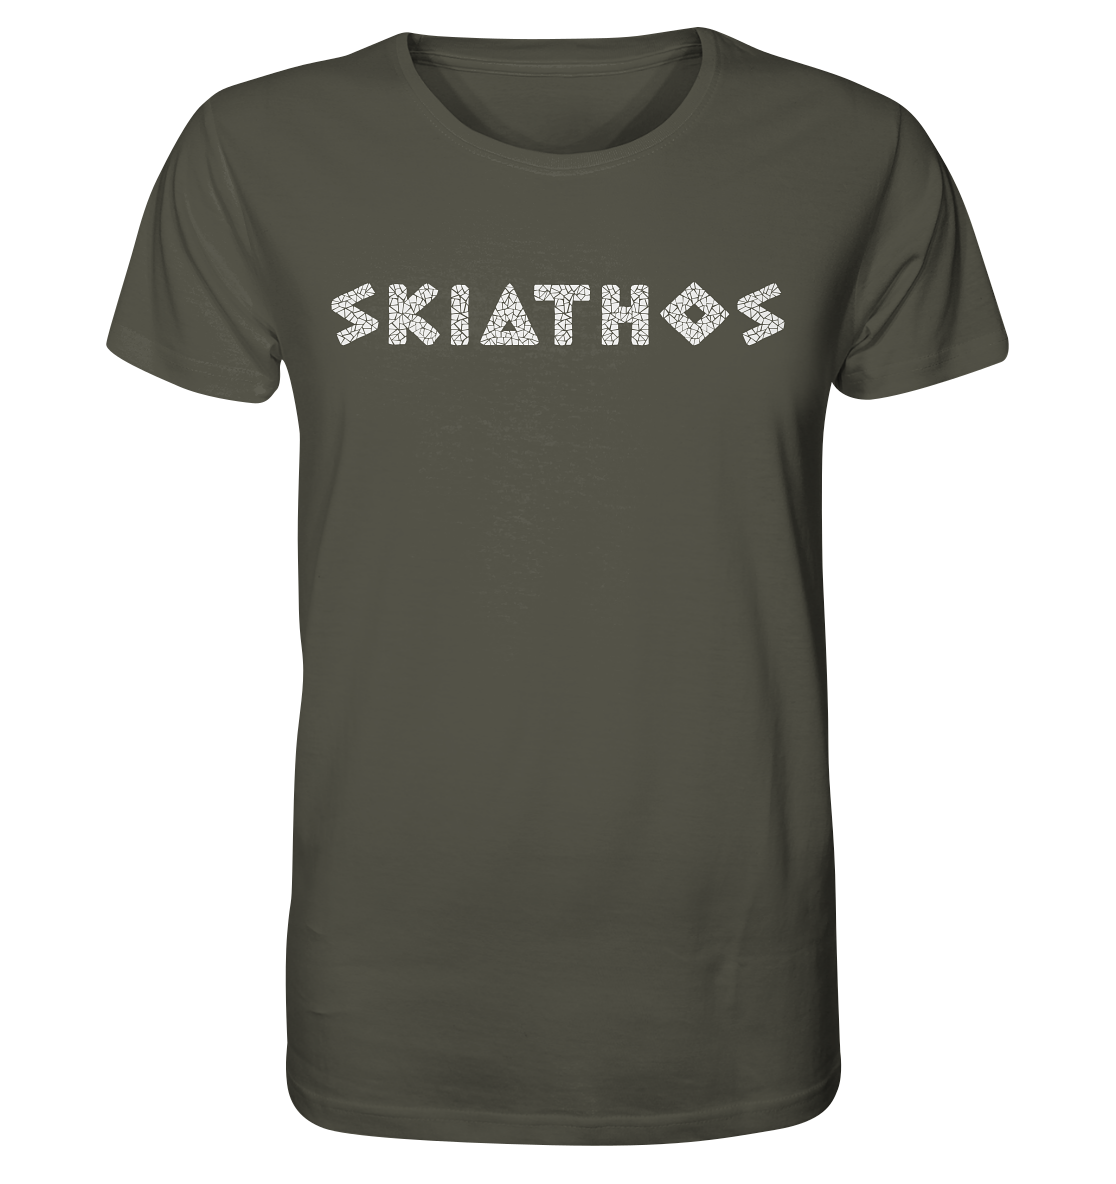 Skiathos Mosaic - Organic Shirt